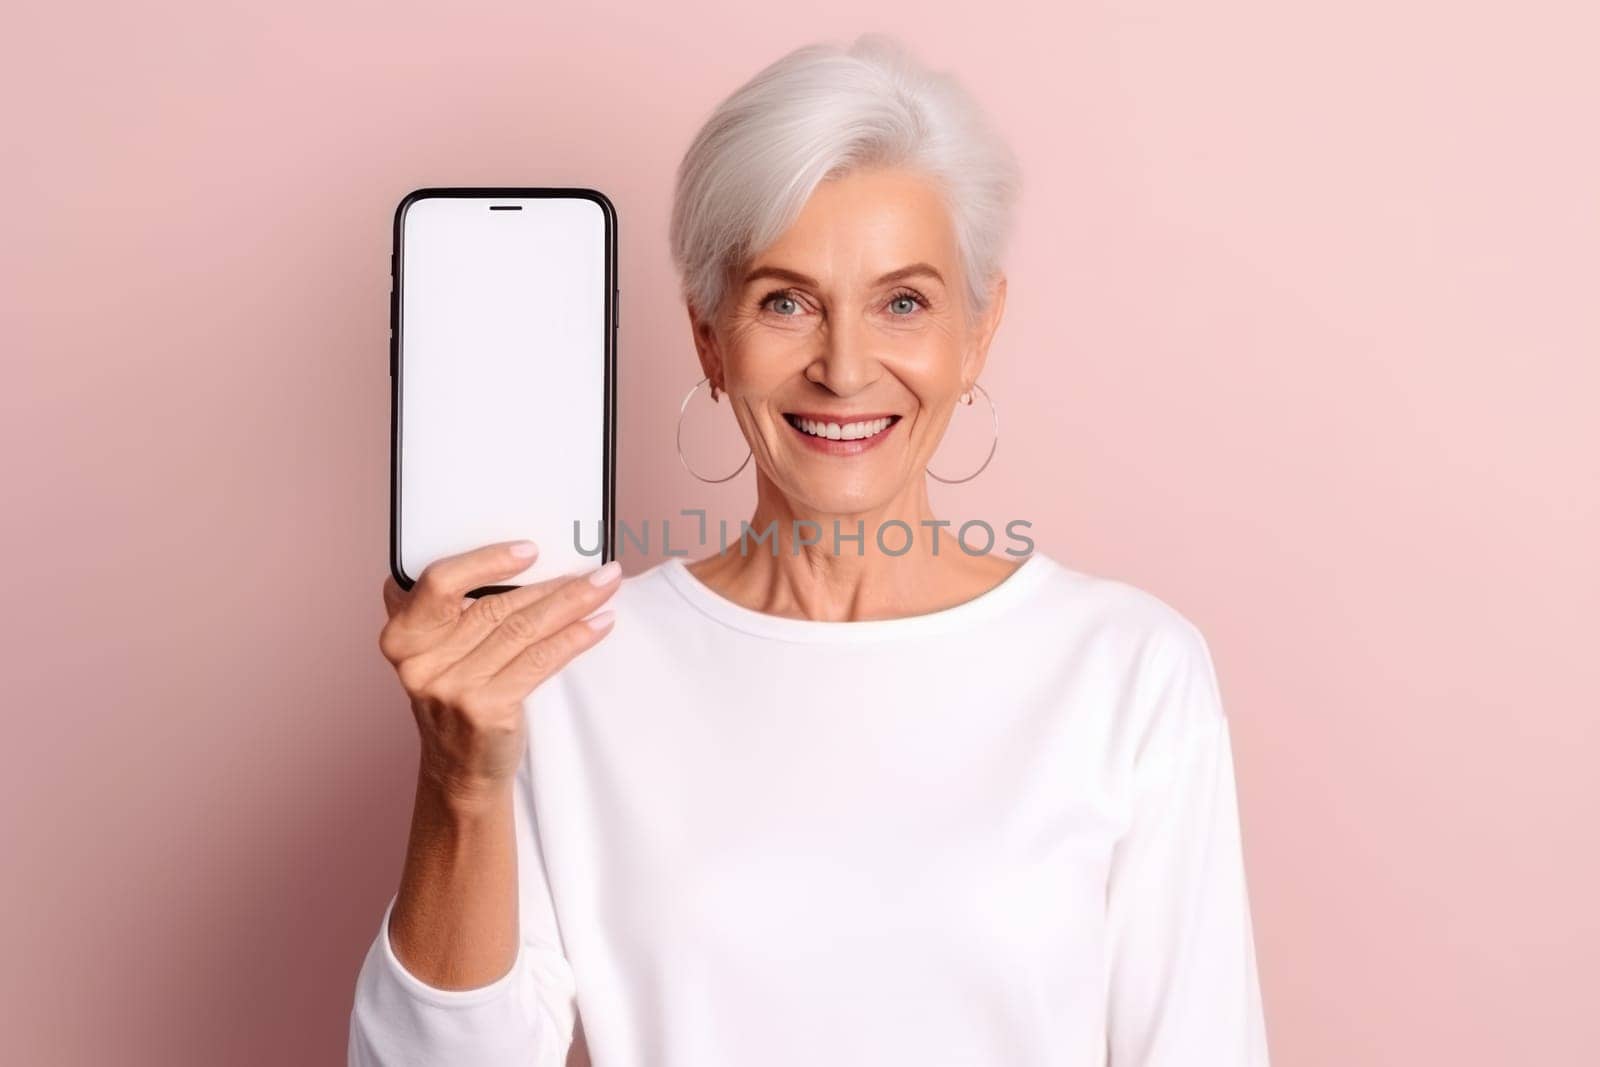 senior woman using a mobile app on her smartphone ,mockup. generative AI.